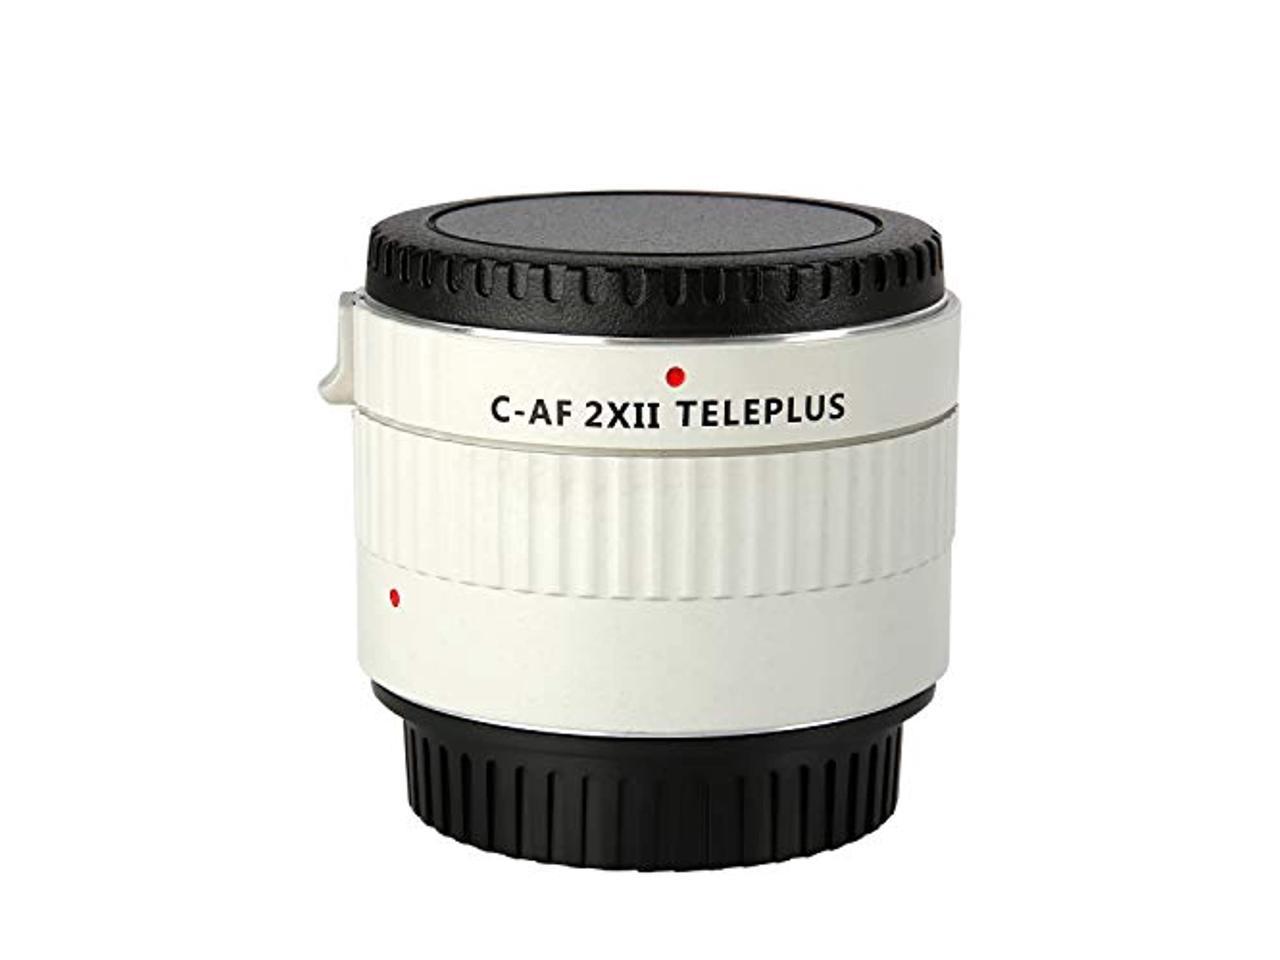 VILTROX C-AF 2X II TELEPLUS Auto Focus 2.0X Telephoto Extender Teleconverter Lens Converter for Canon EF Mount Super Telephoto Lens 135mm f/2L,70-200mm,10L,70-200mm,100-400mm and DSLR Camera 5DII 80D 